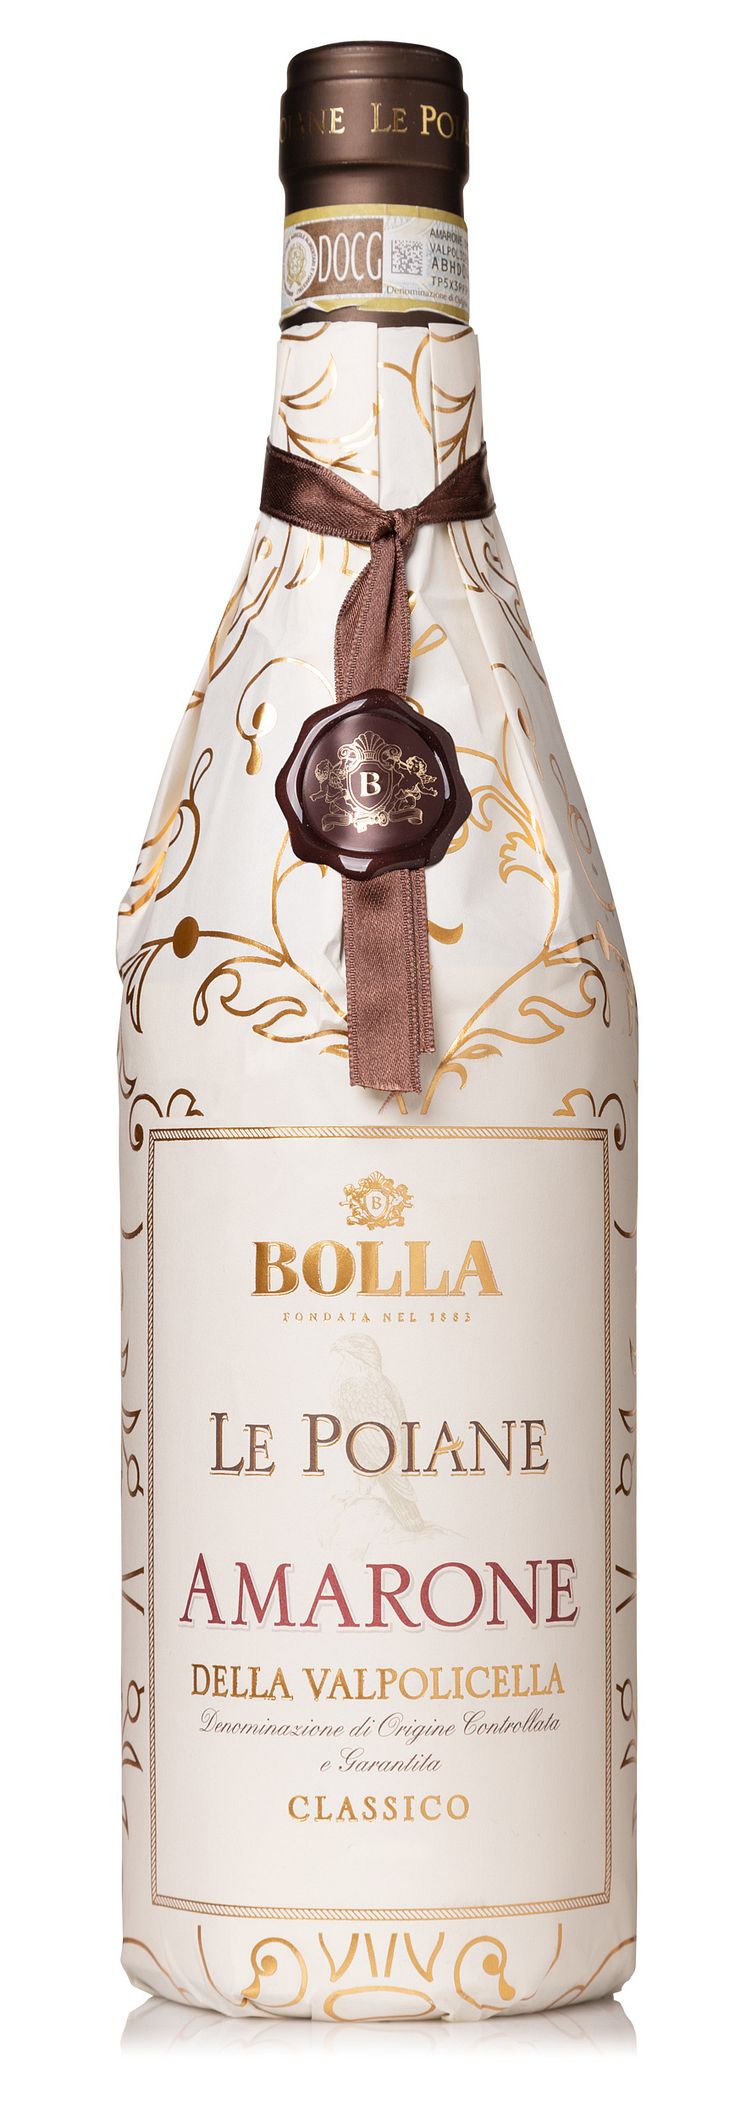 Bolla-Le-Poine-Amarone-ny-wrap_PRESS.jpg